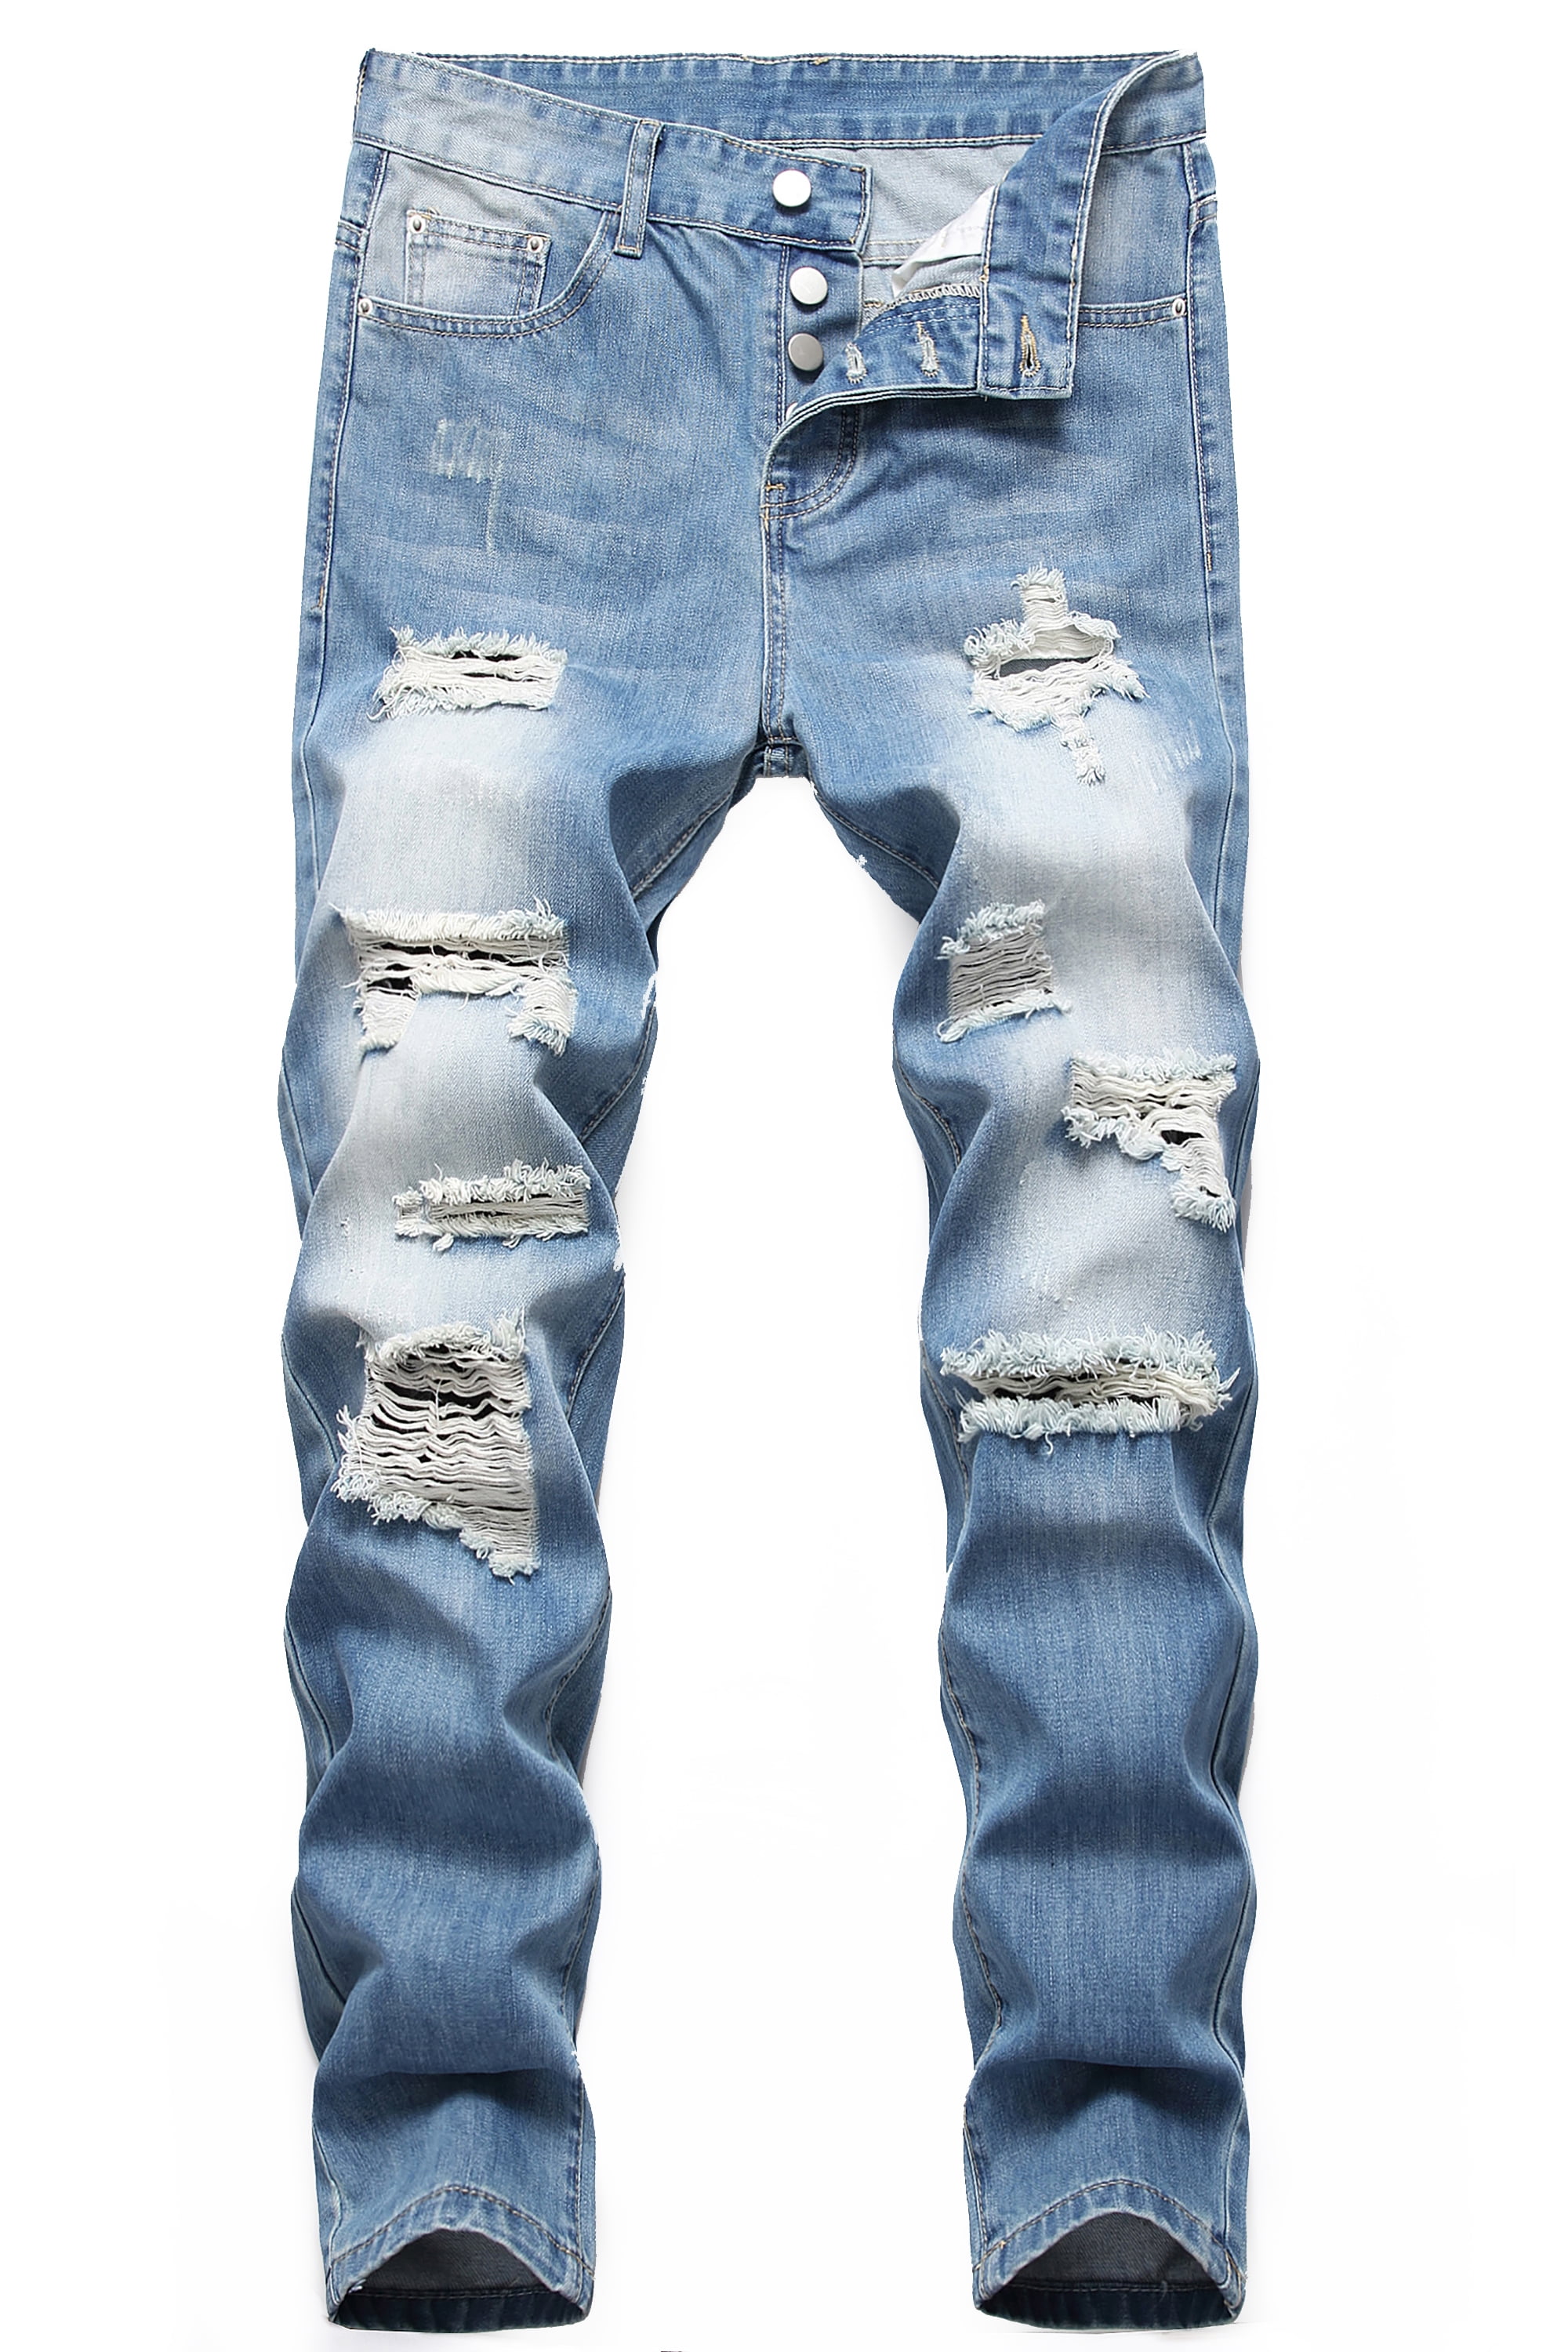 LZLER Men's Slim Fit Ripped Destroyed Fashion Buckle Jeans for Men ...